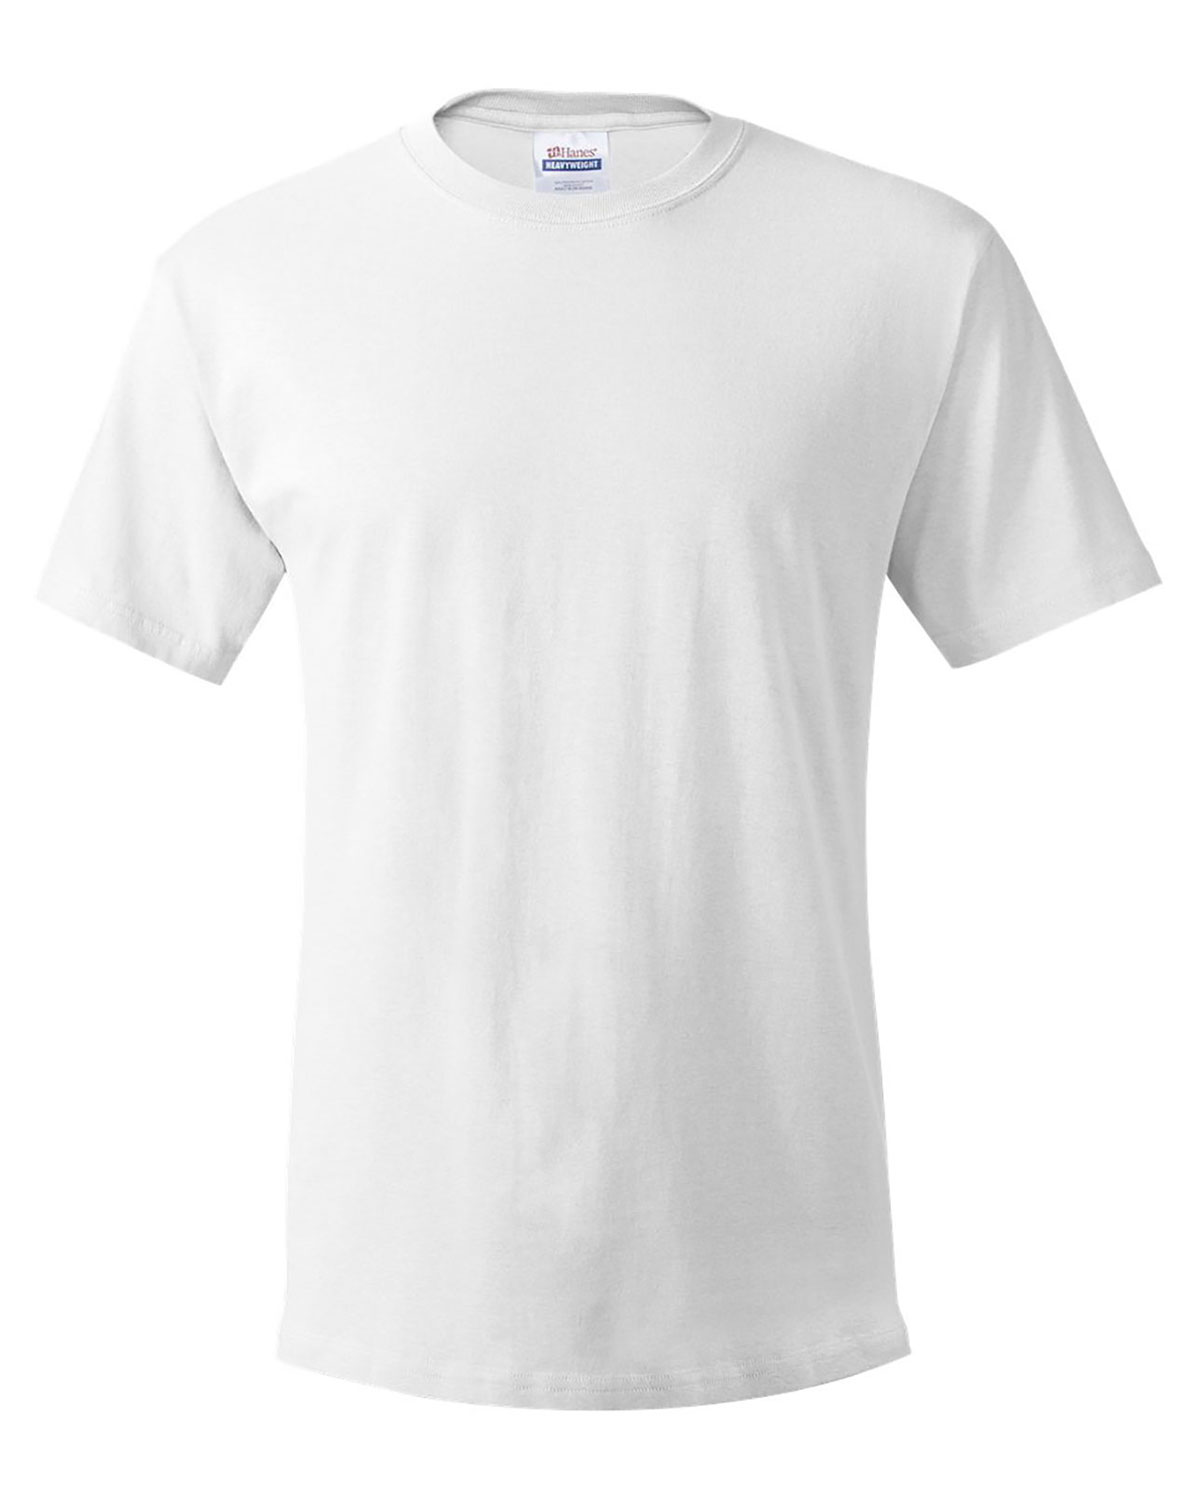 Hanes 5280 Unisex 5.2 Oz. Comfort Soft Cotton T-Shirt at Apparelstation